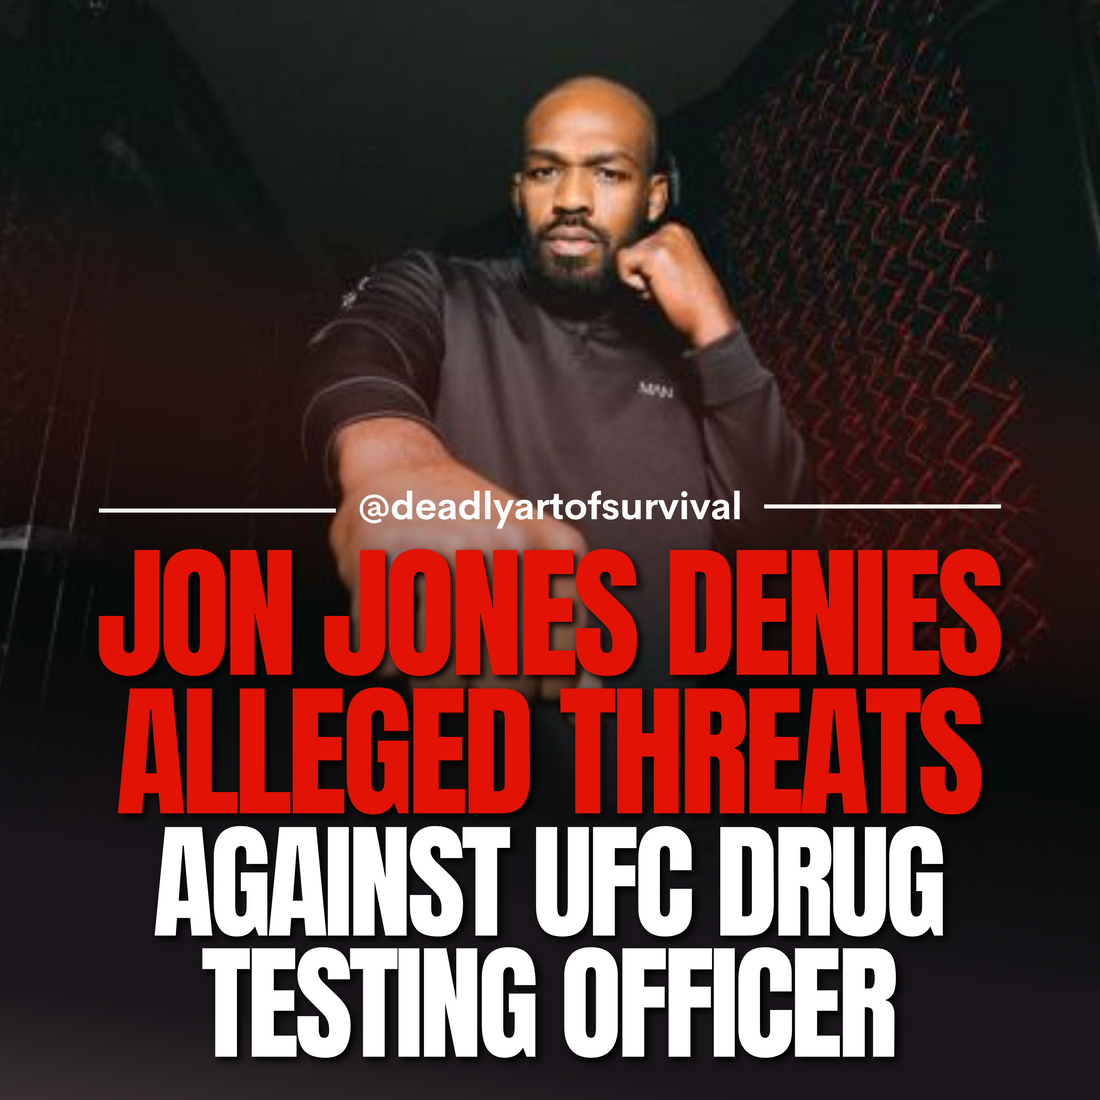 Jon-Jones-Denies-Allegations-of-Threatening-UFC-Drug-Testing-Officer-Provides-Home-Security-Footage deadlyartofsurvival.com